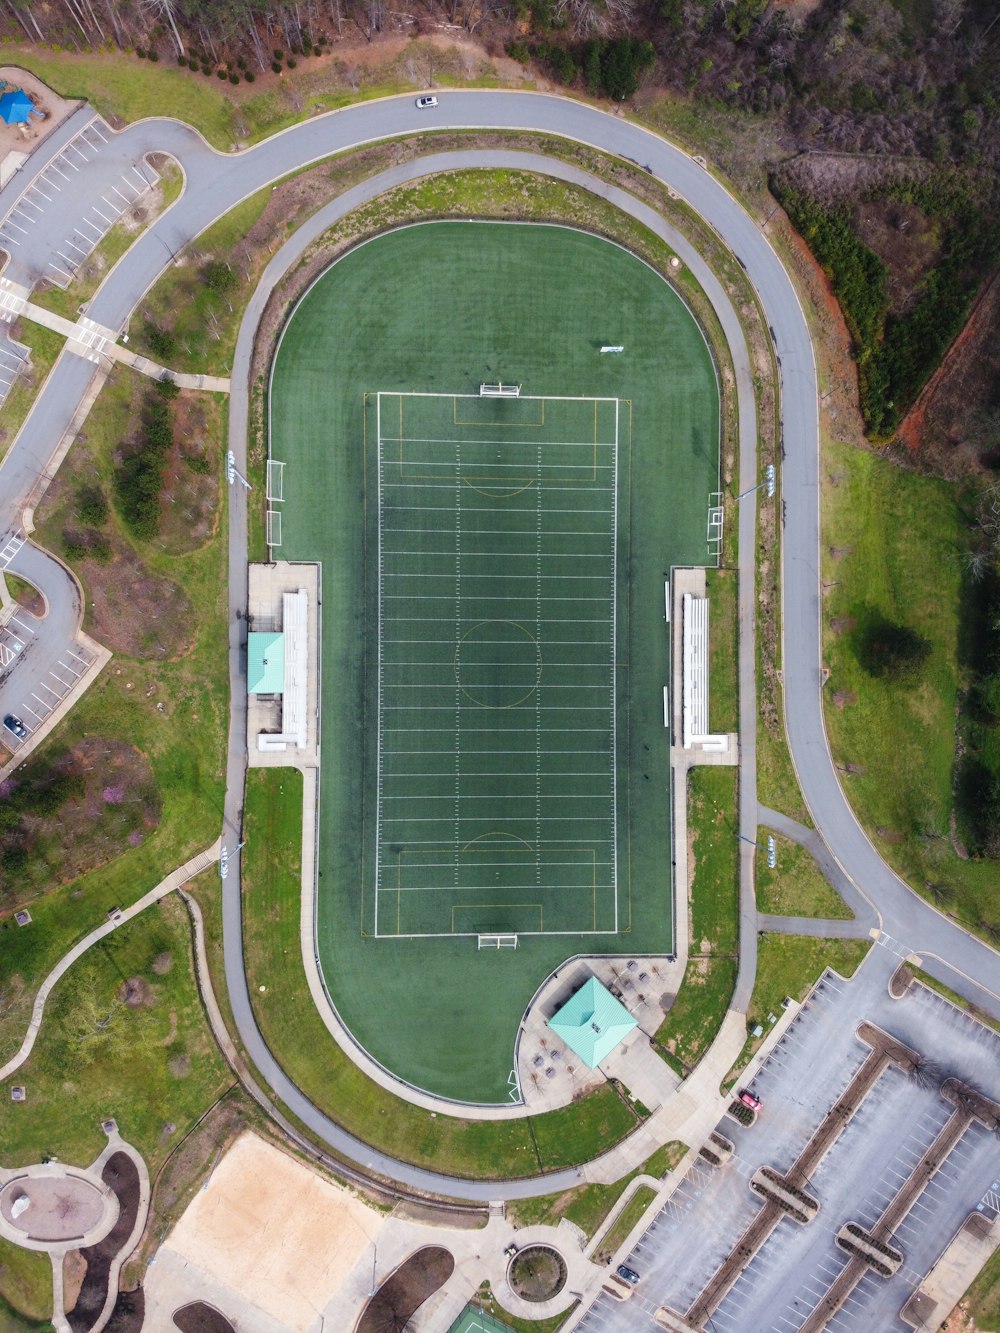 aerial view of green stadium